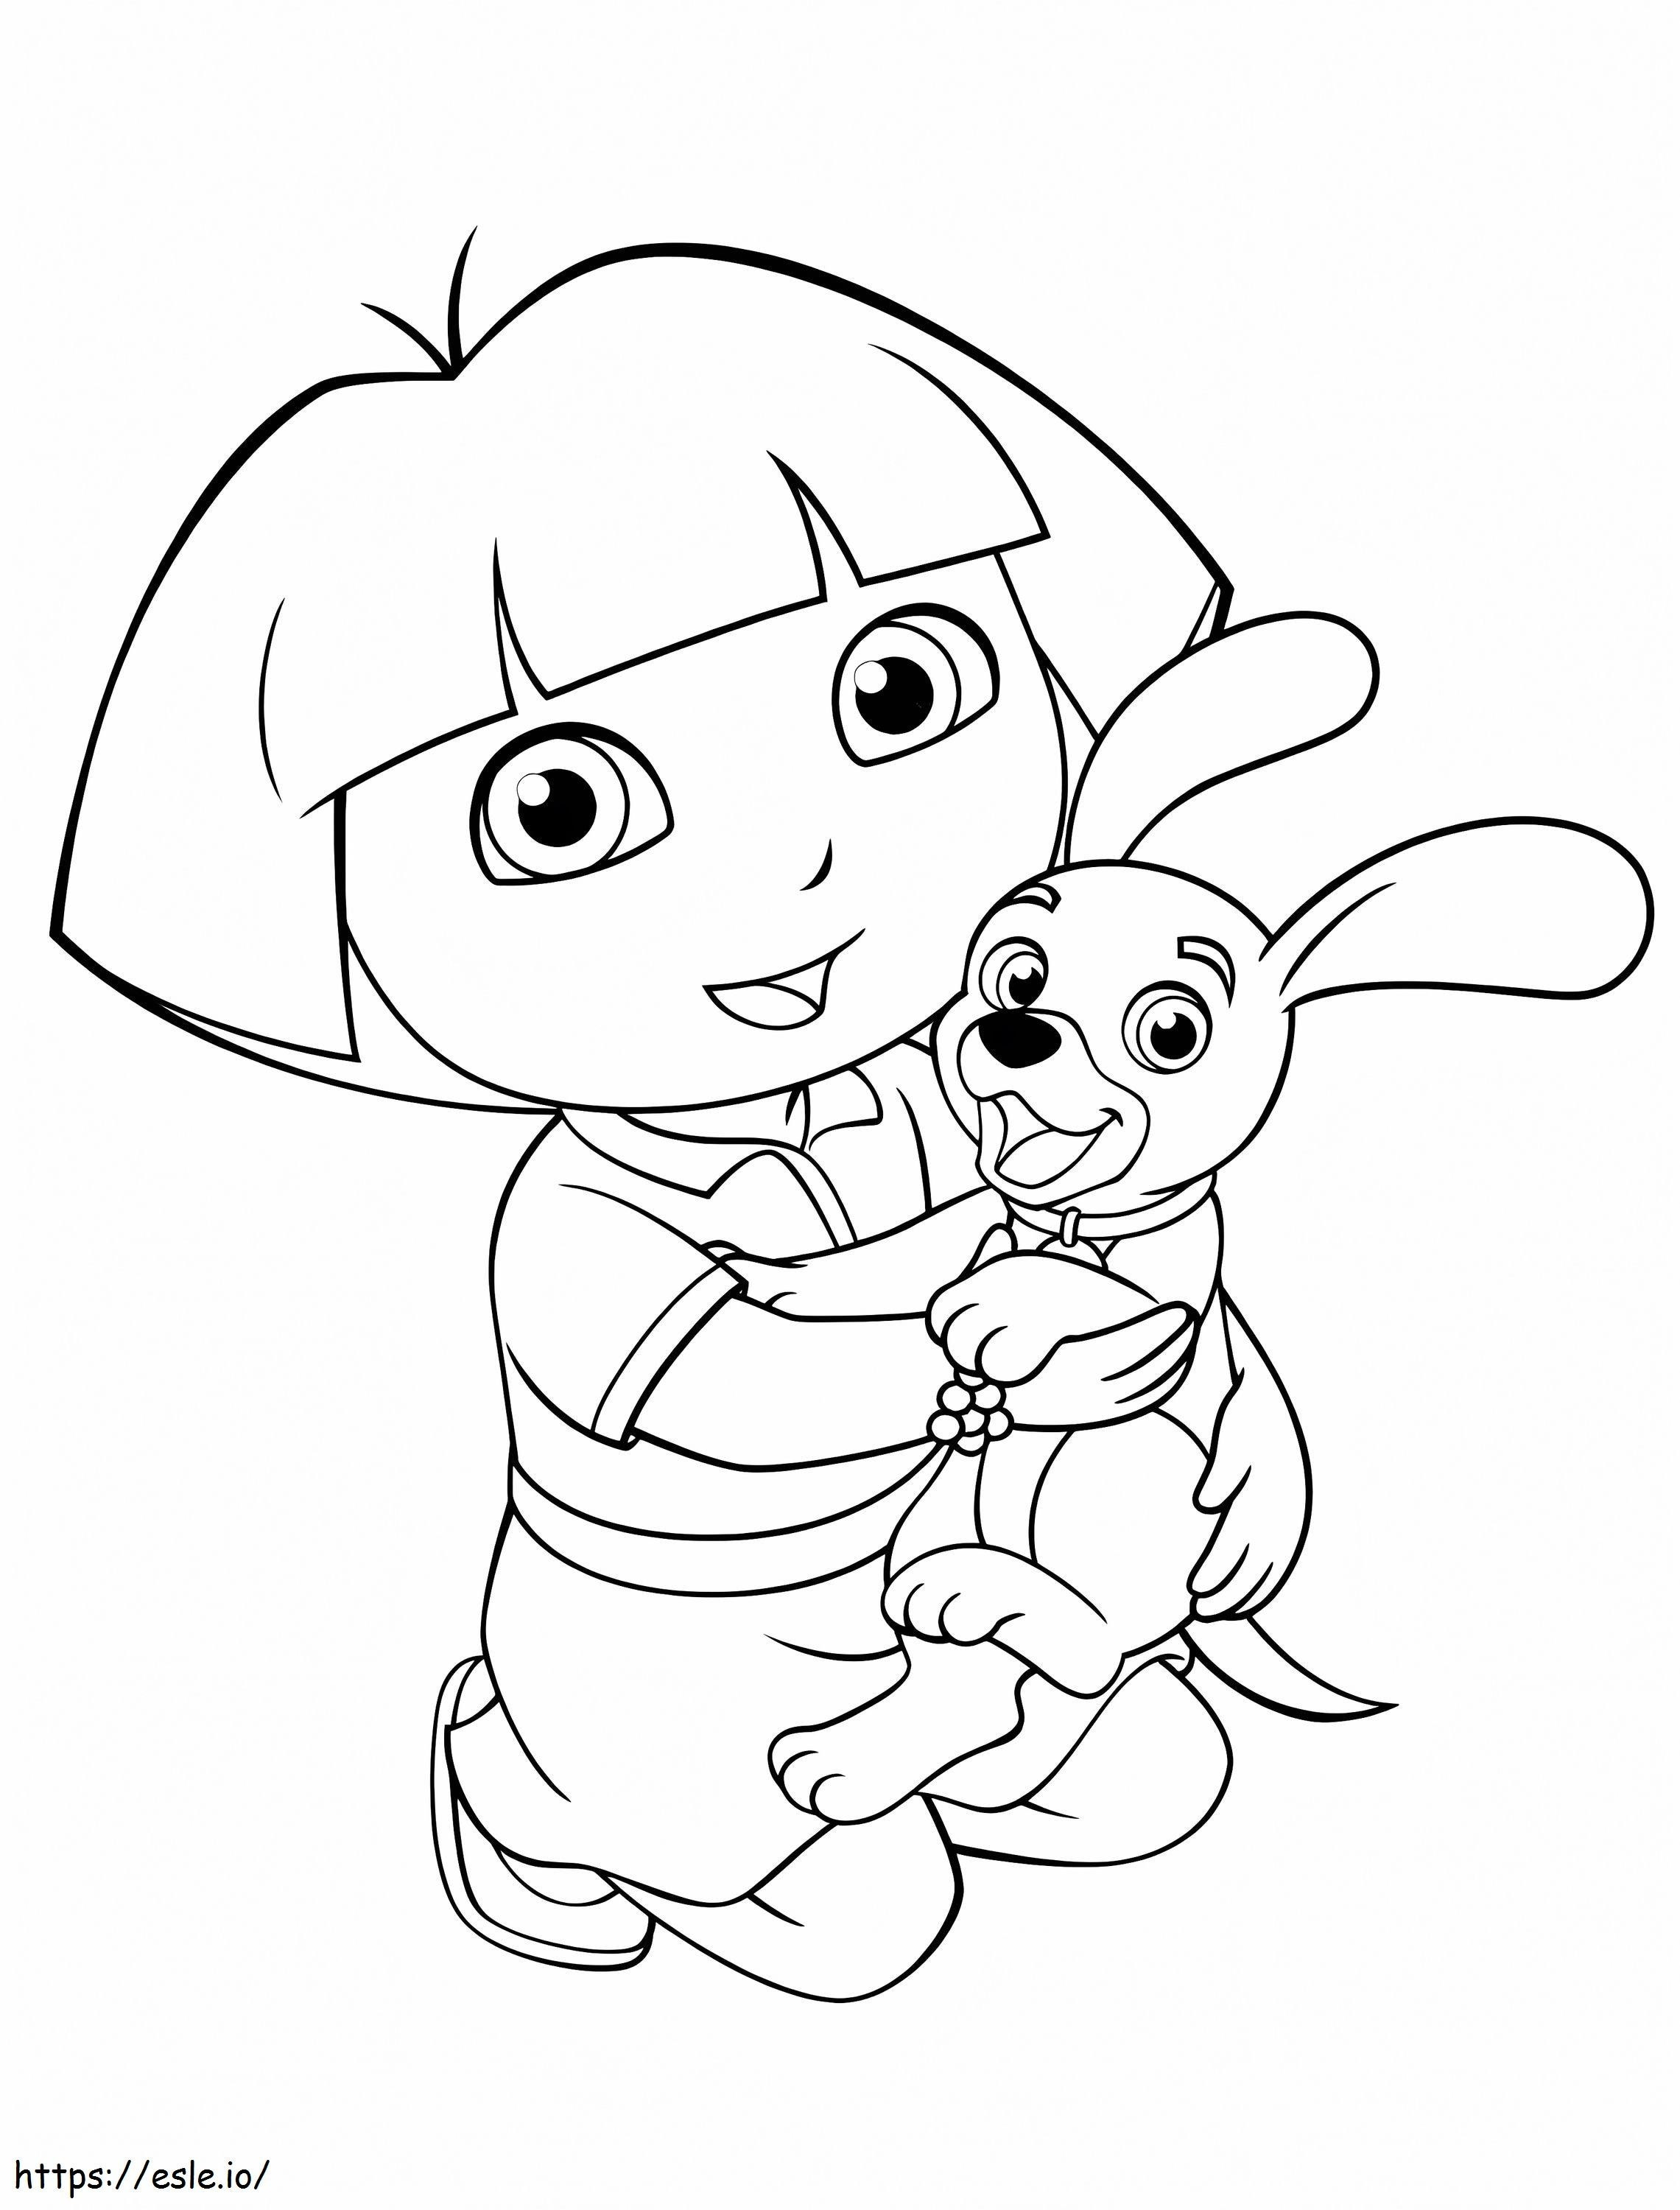 Friendly Dora coloring page